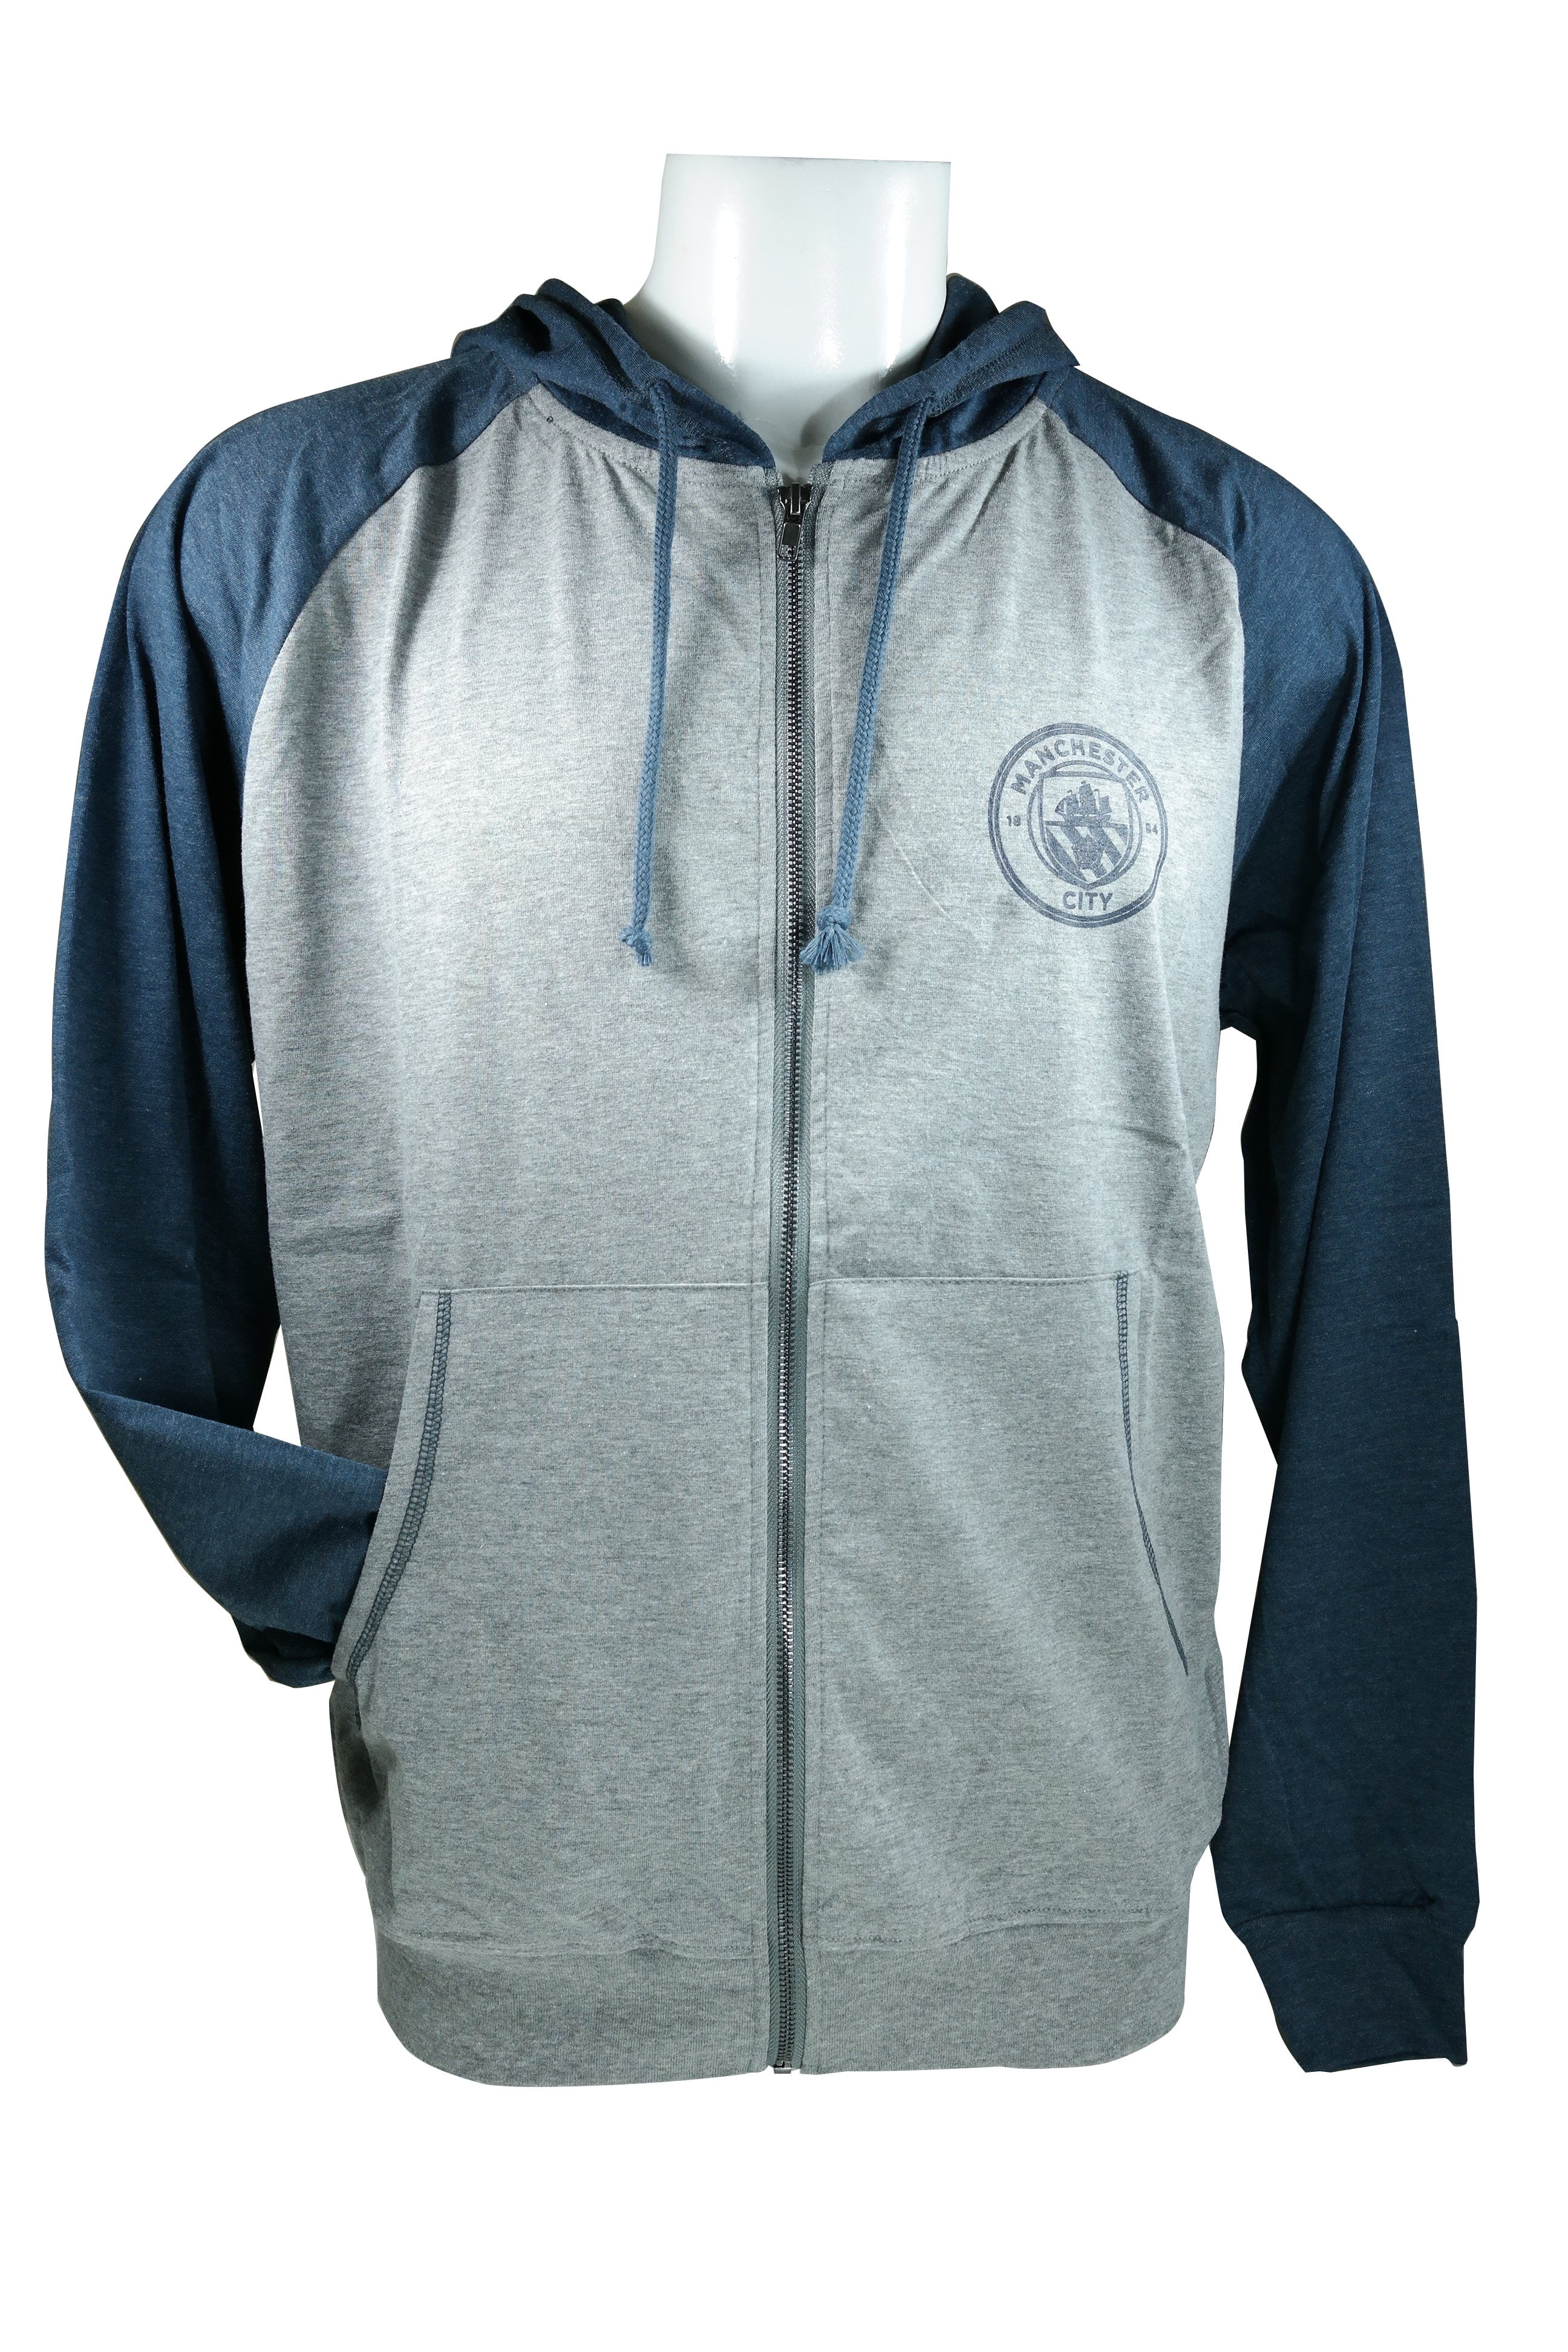 Summer Light Jacket Sweatshirt Official Soccer Hoodie Liverpool F.C L 007 